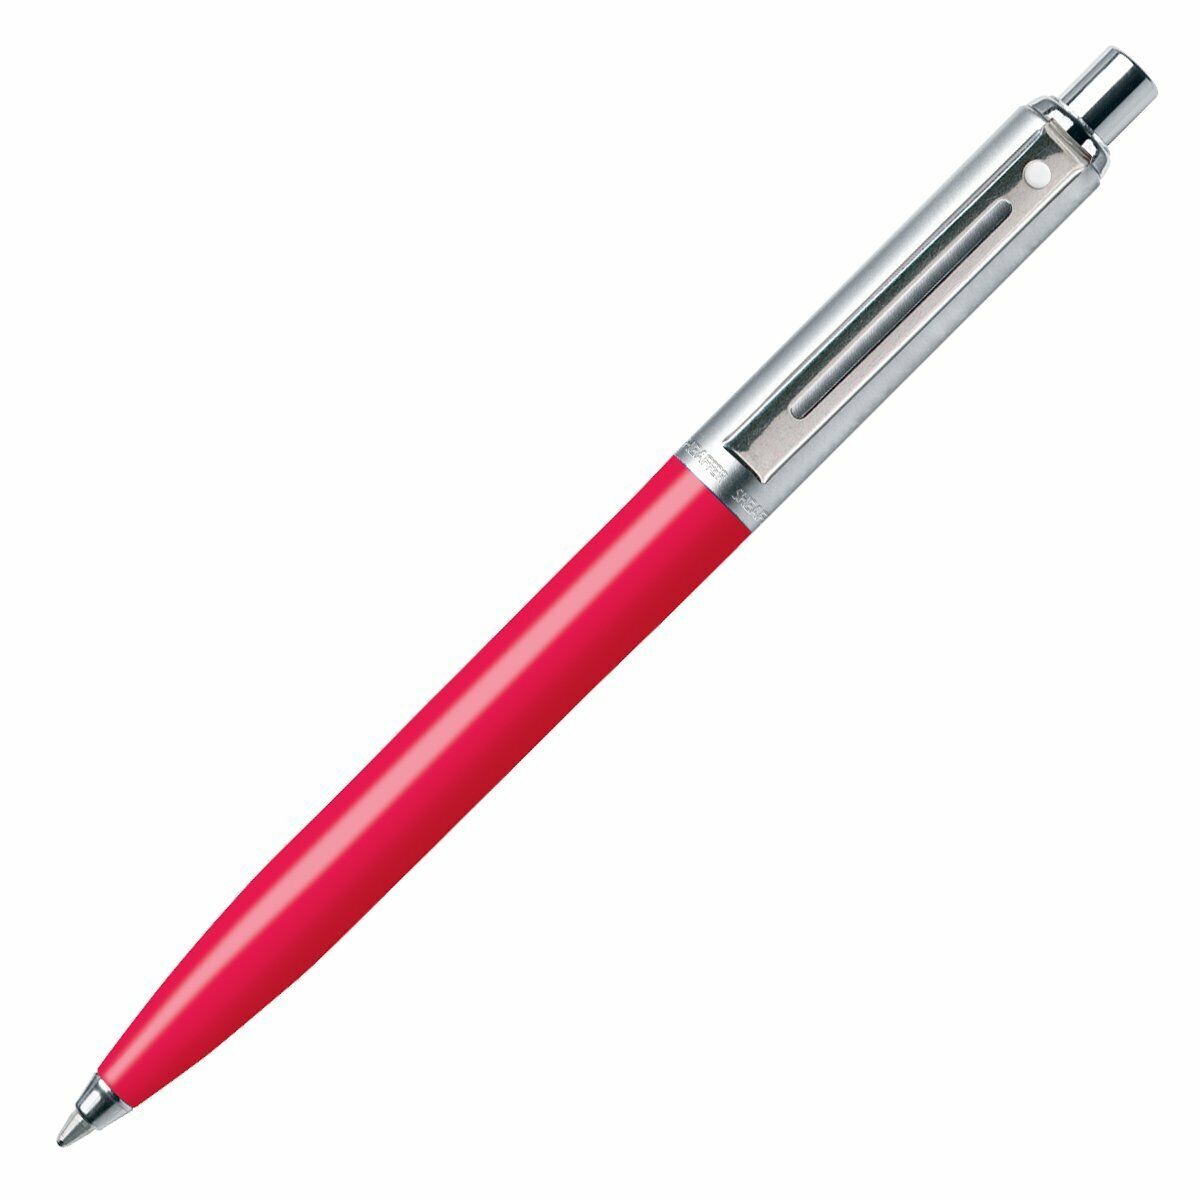 Sheaffer Sentinel Retractable Ball Point Pen, Deep Pink Resin Barrel, Chrome Cap